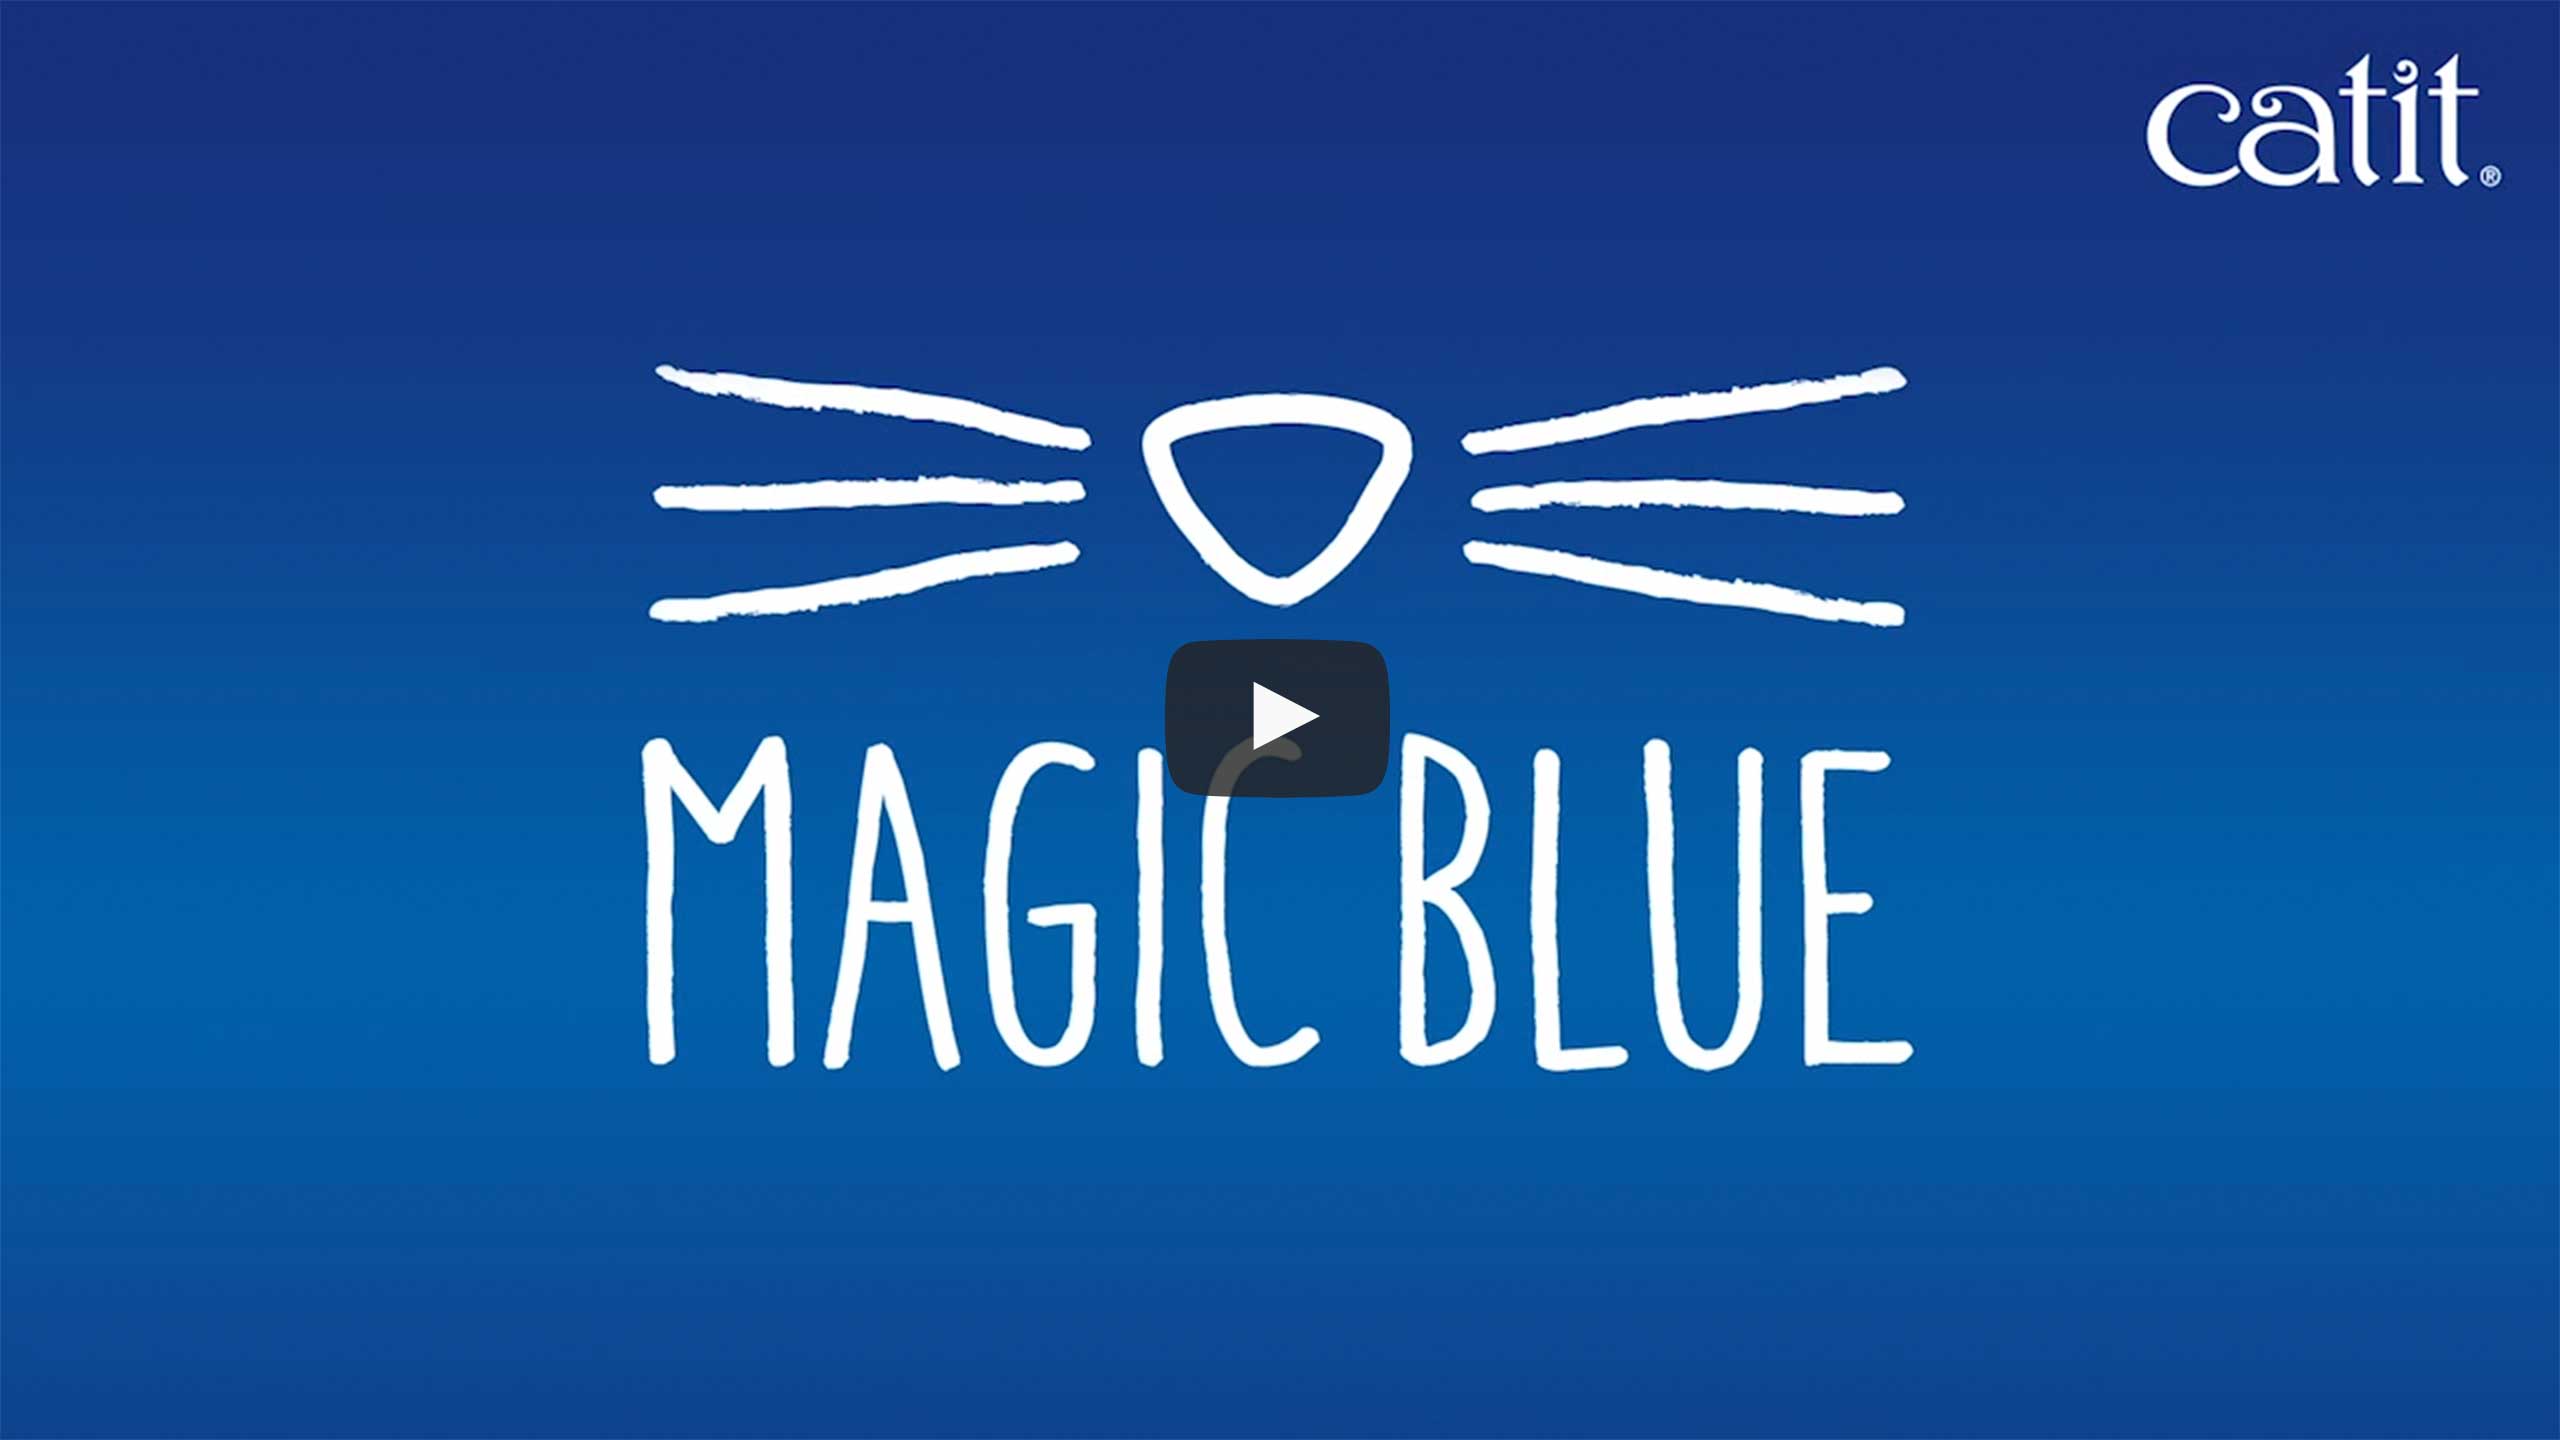 Catit Magic Blue vídeo